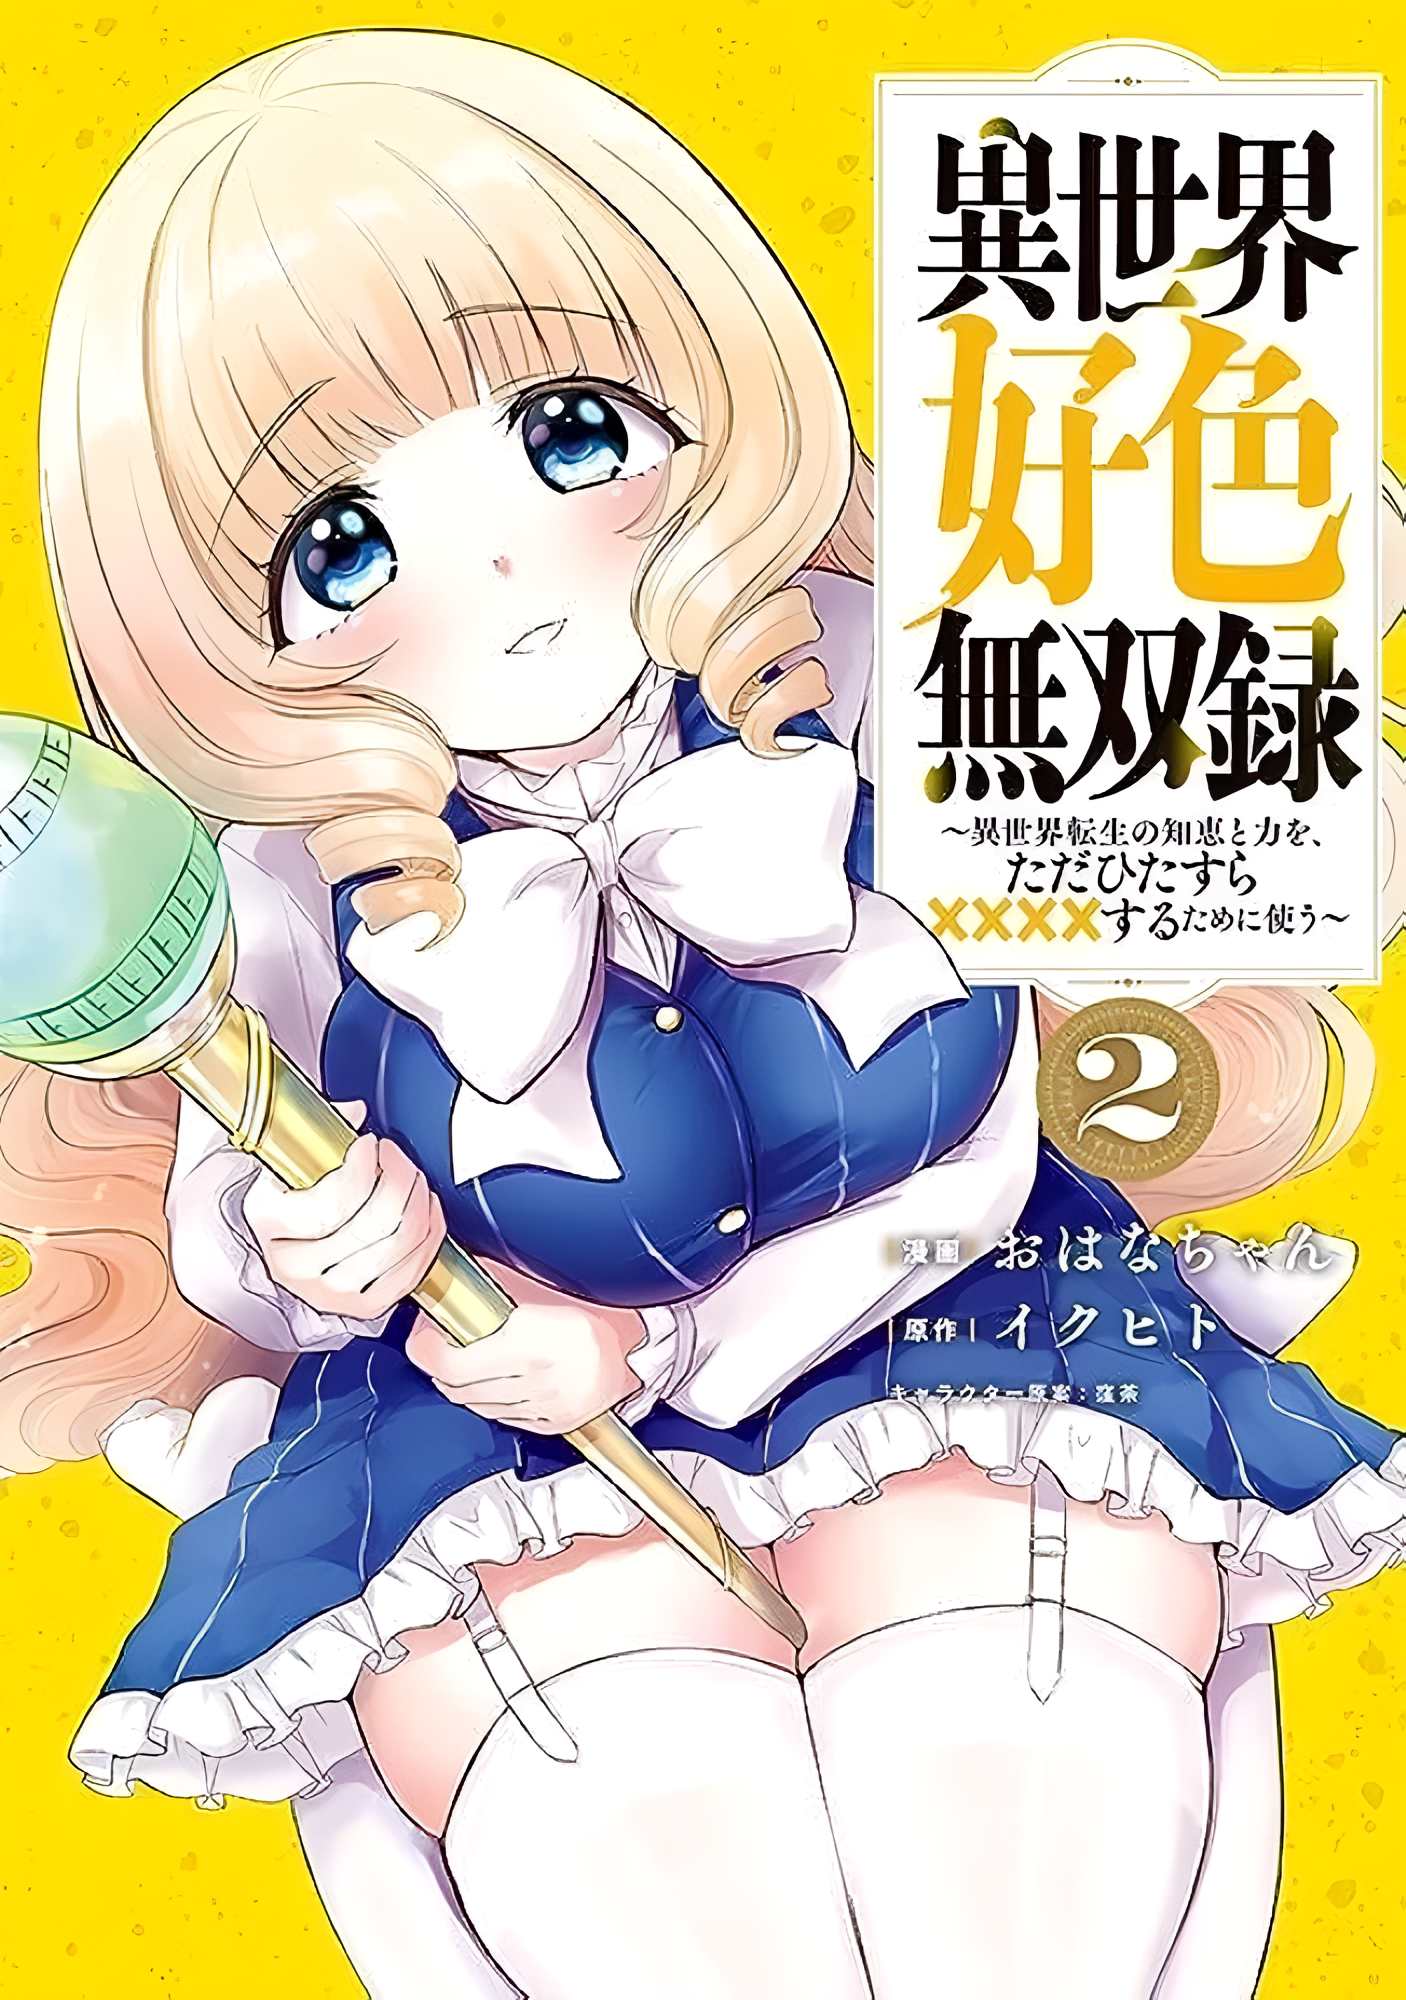 Light Novel Volume 6, Cheat Musou Wiki